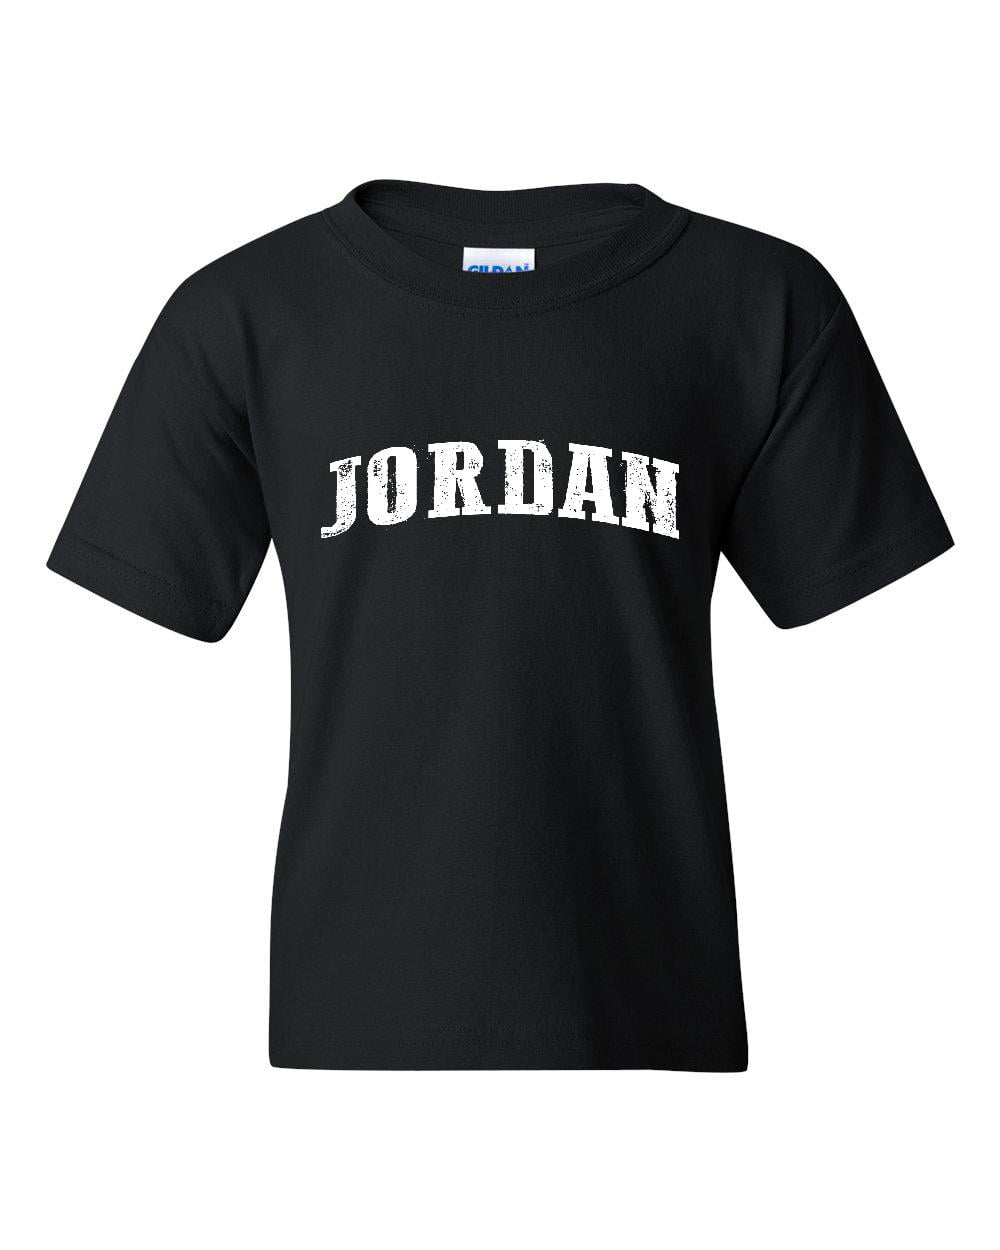 jordan shirts for boys